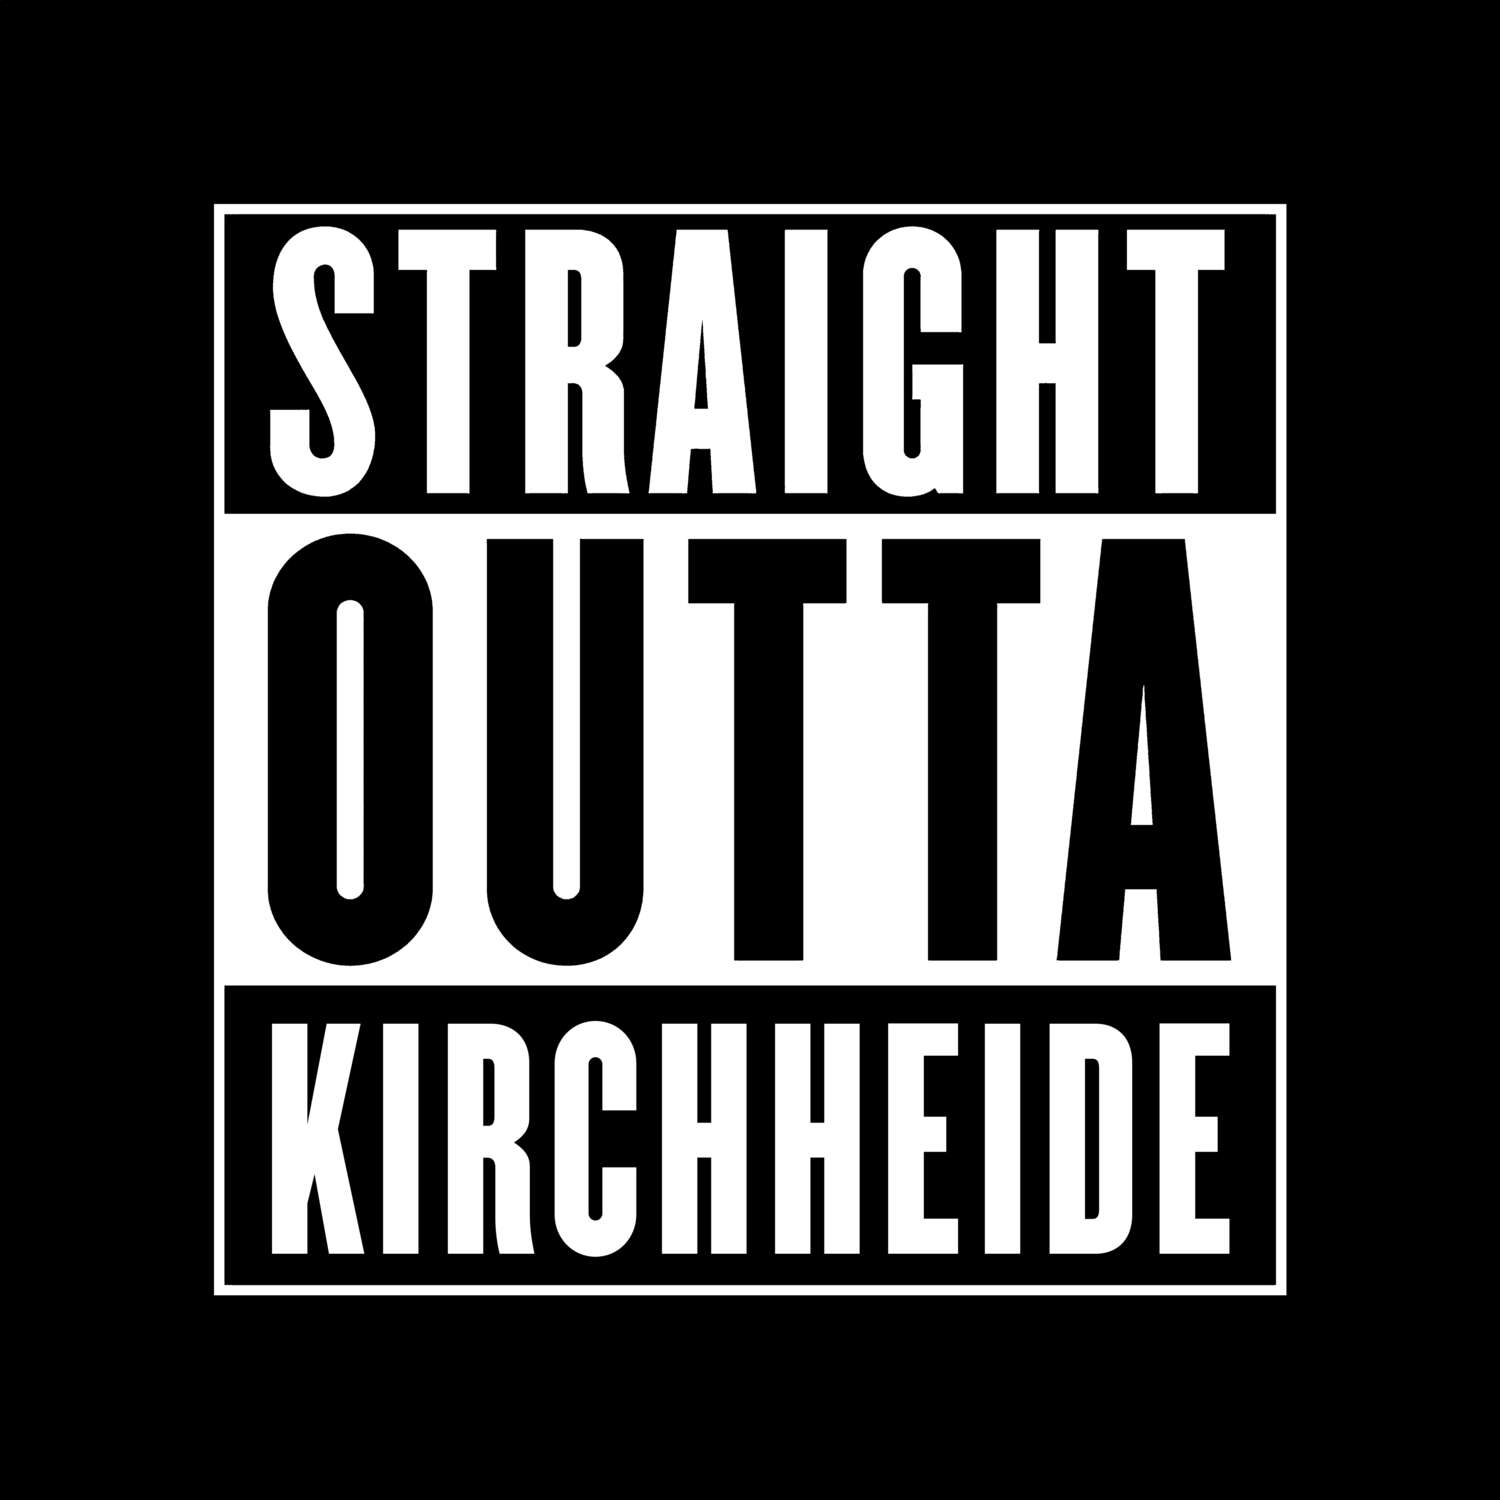 Kirchheide T-Shirt »Straight Outta«